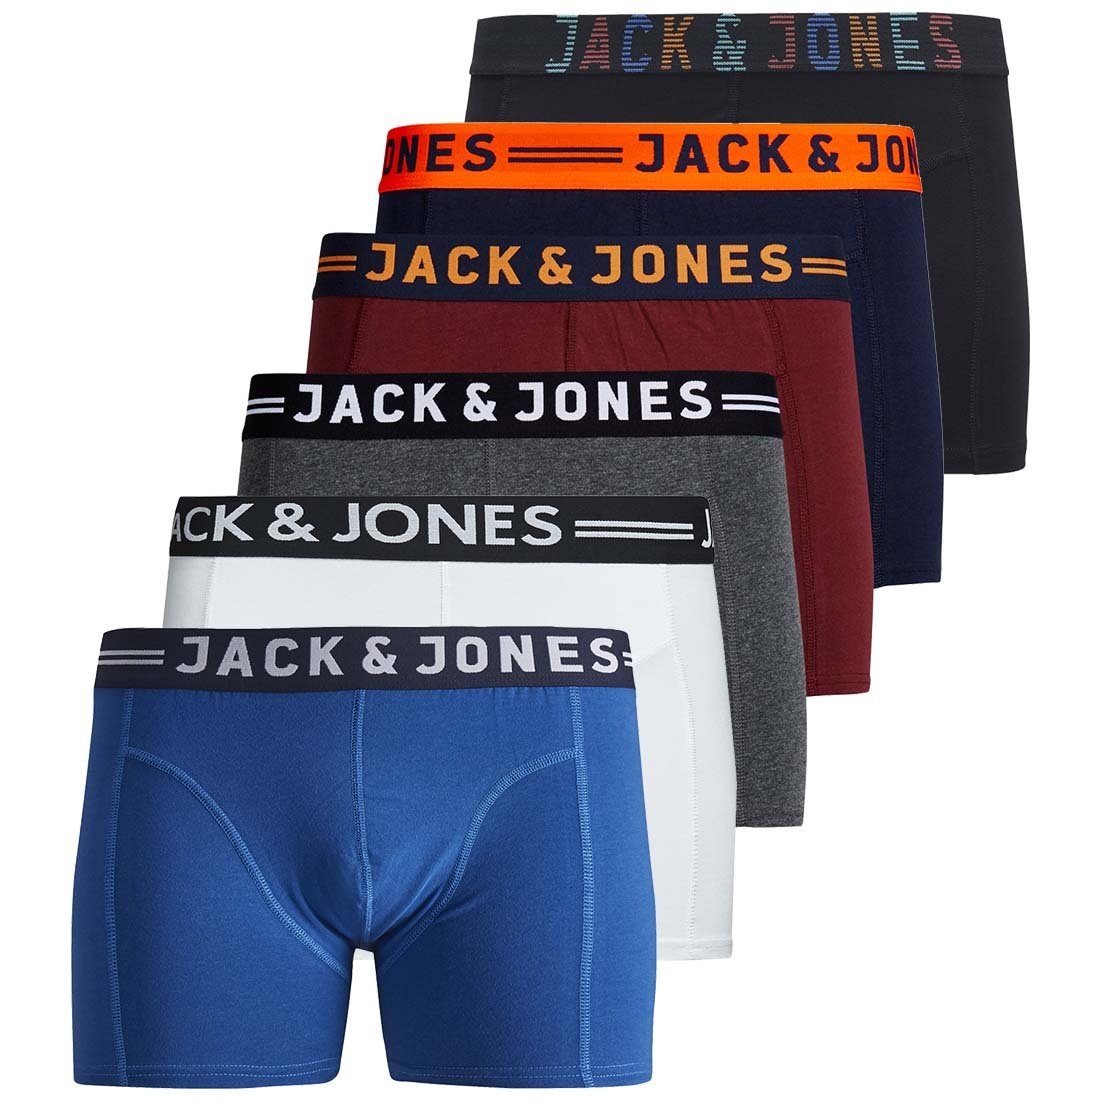 Jack & Jones Boxershorts JACK JONES Boxershorts 6er Pack Herren Männer Short Unterhose Marke S M L XL XXL Mehrfarbig 1